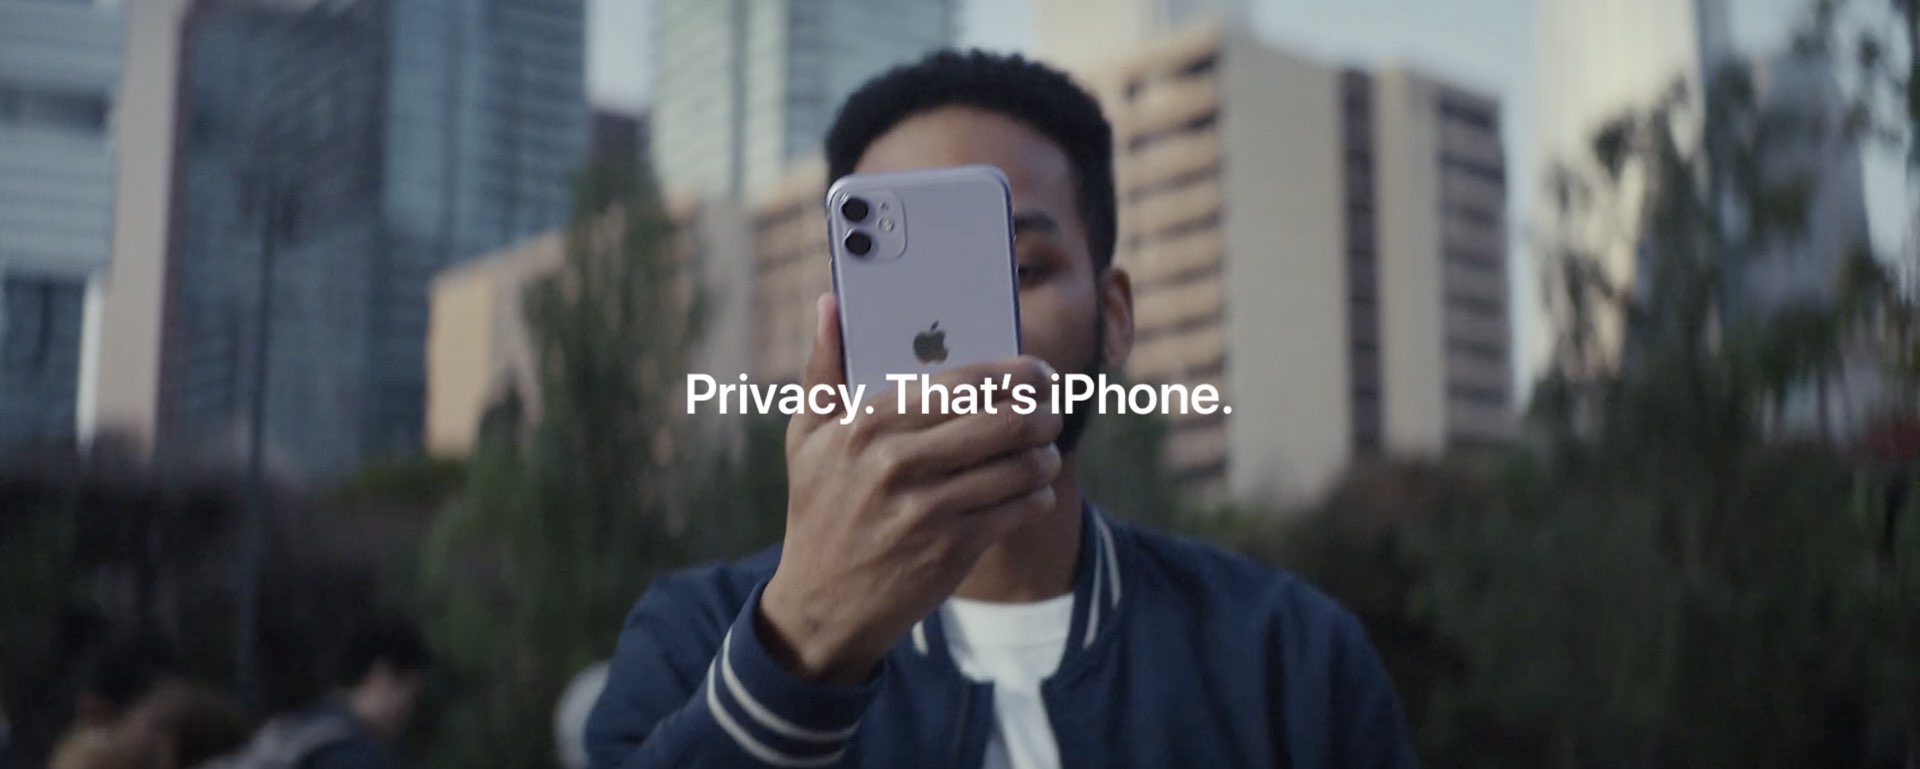 iklan apple privacy copywriting